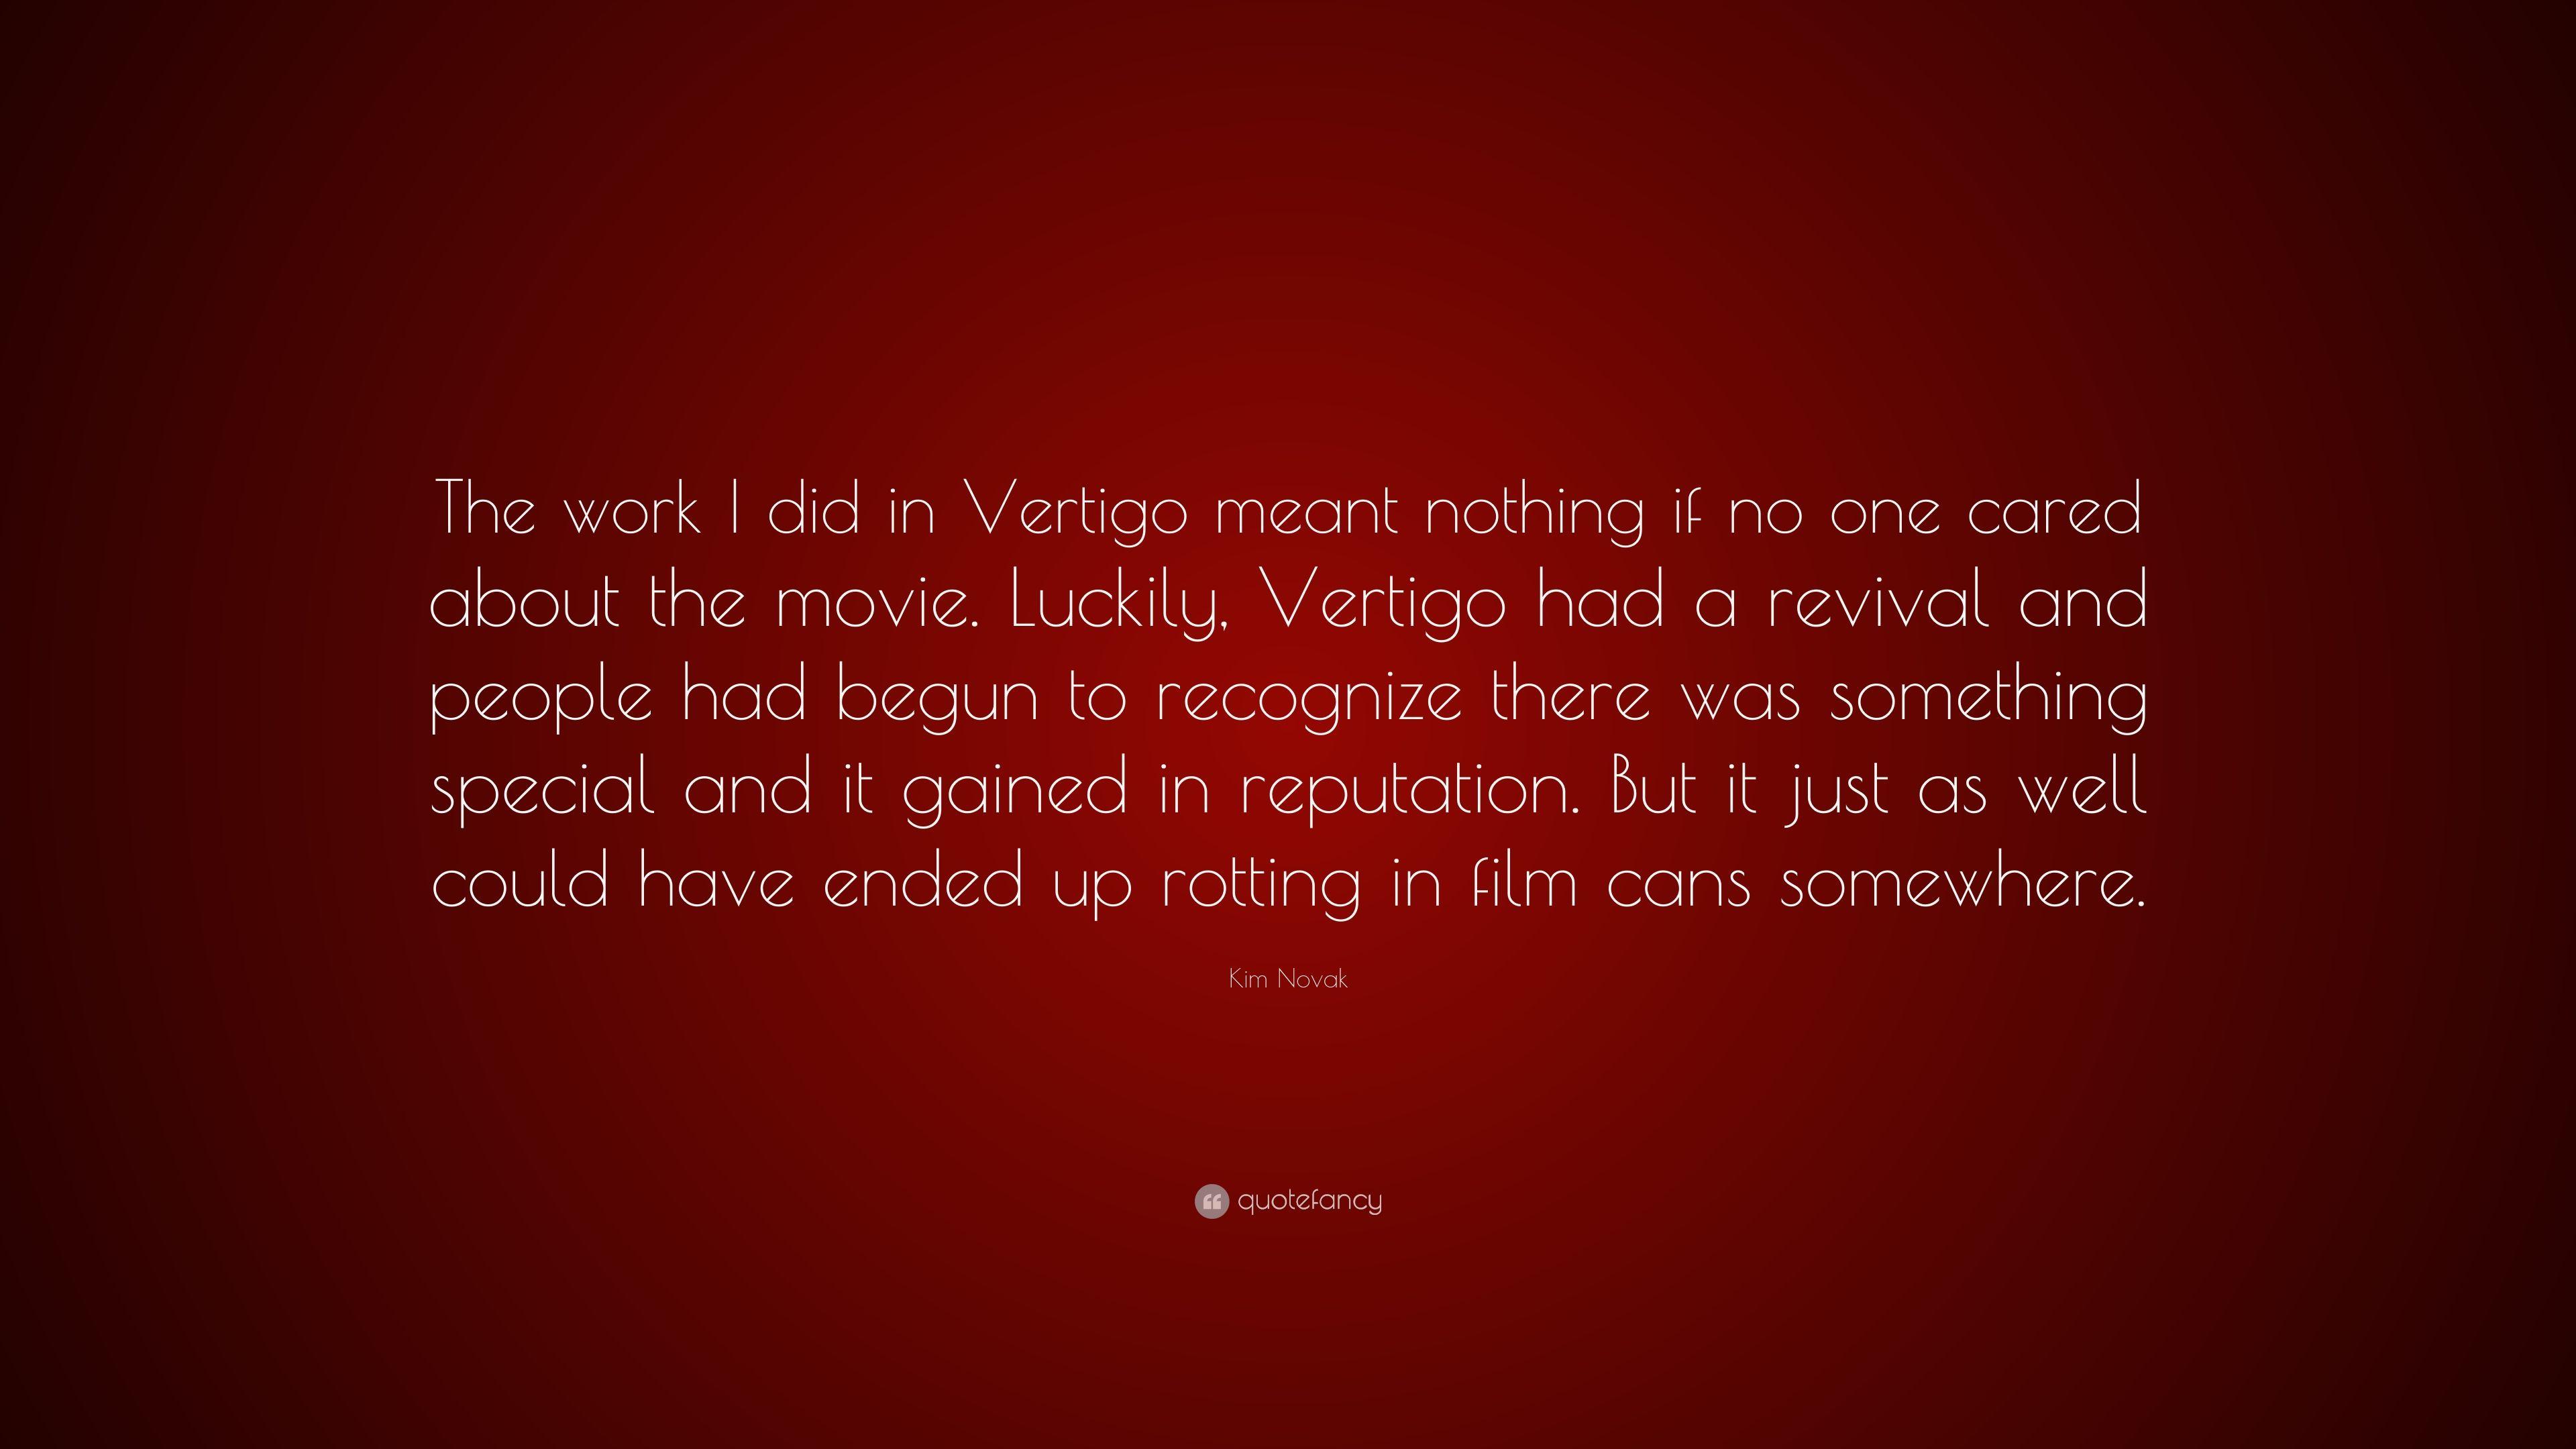 Kim Novak Quote: “The work I did in Vertigo meant nothing if no one